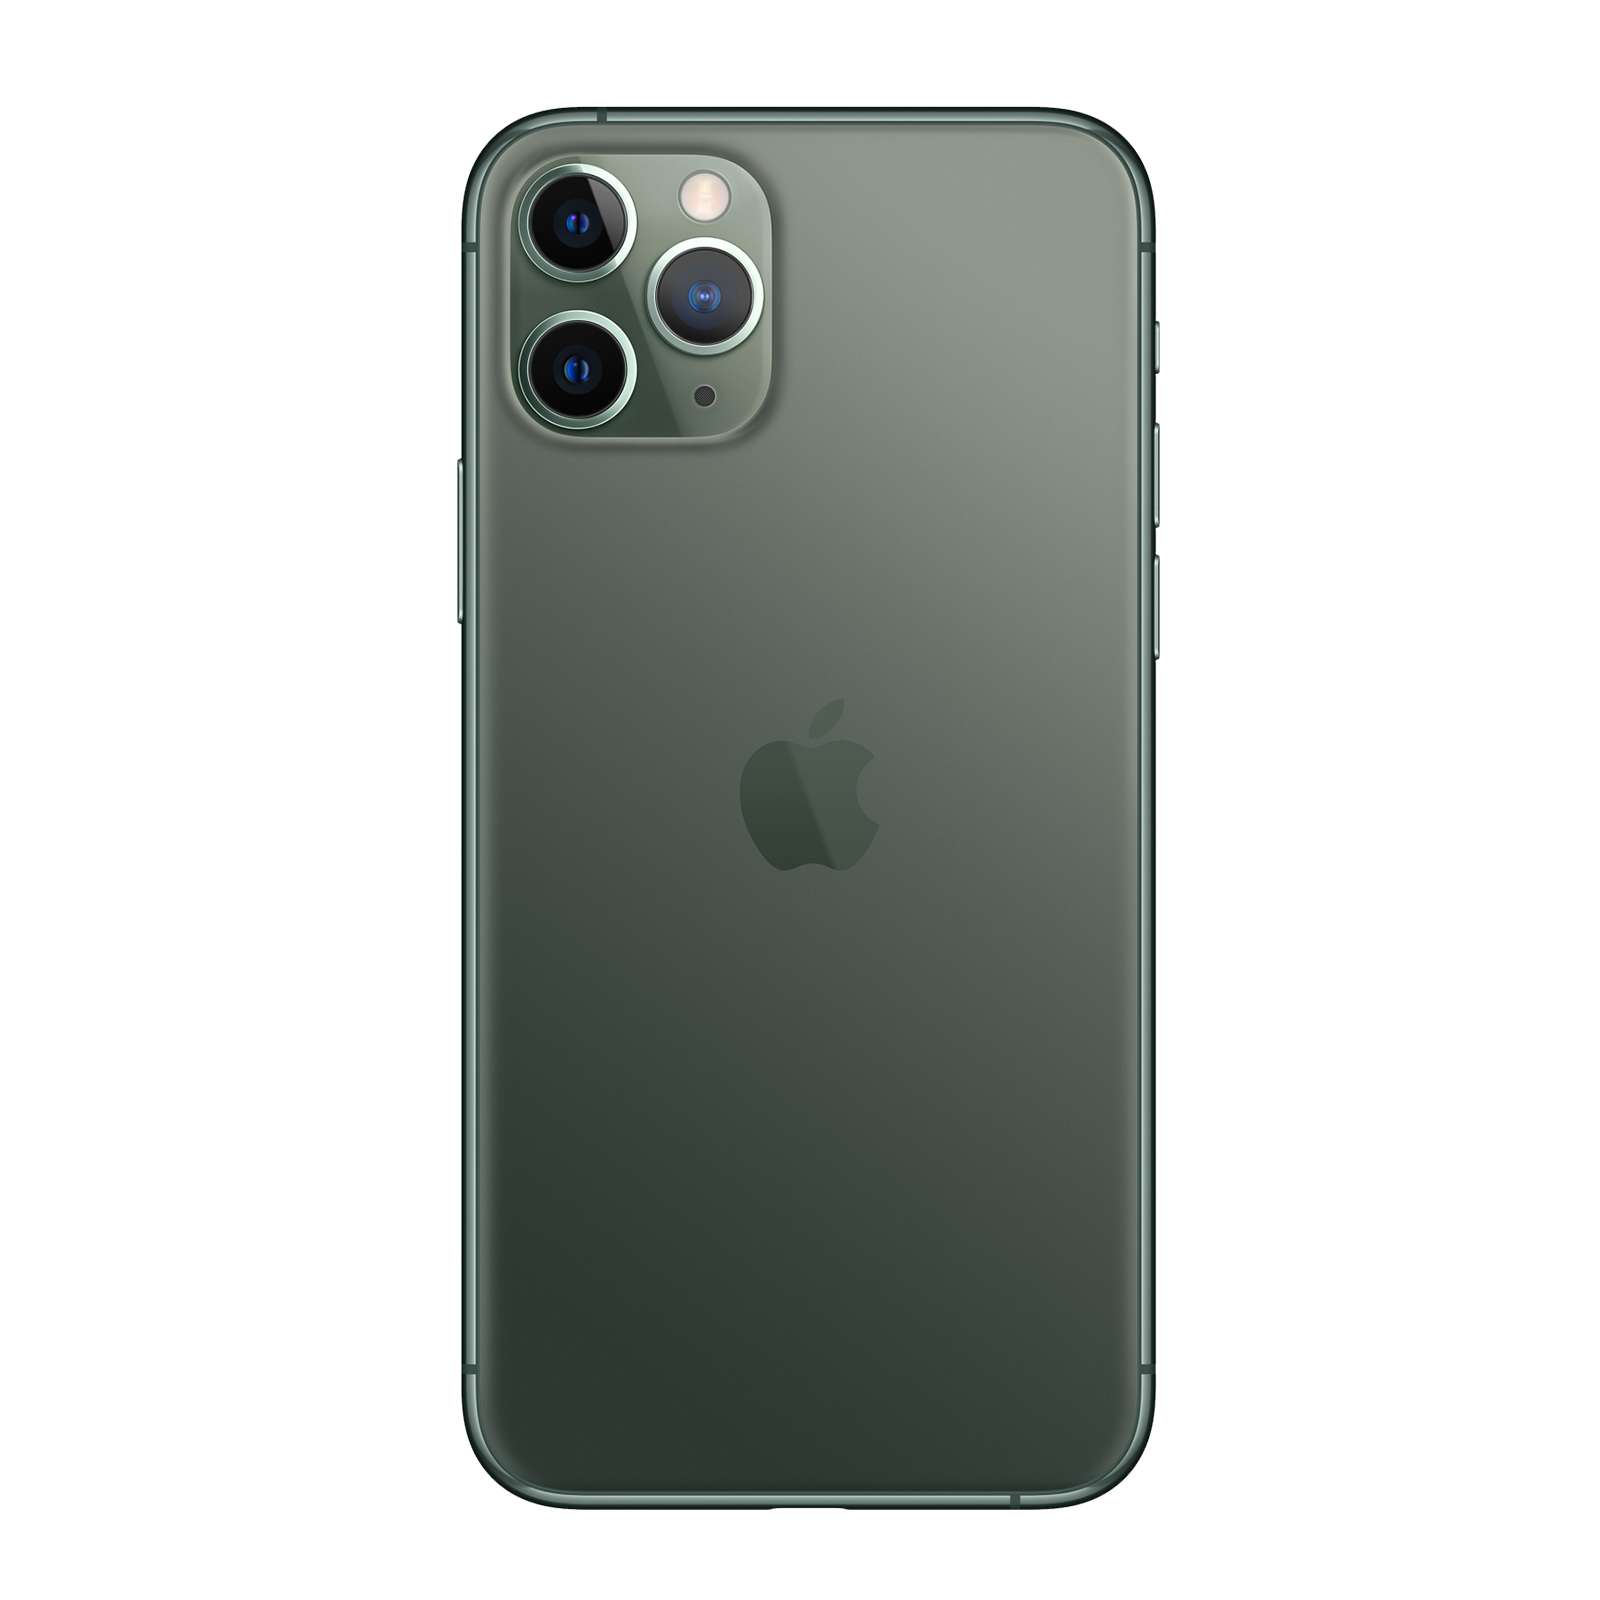 Apple iPhone 11 Pro 512GB Midnight Green Good - Unlocked